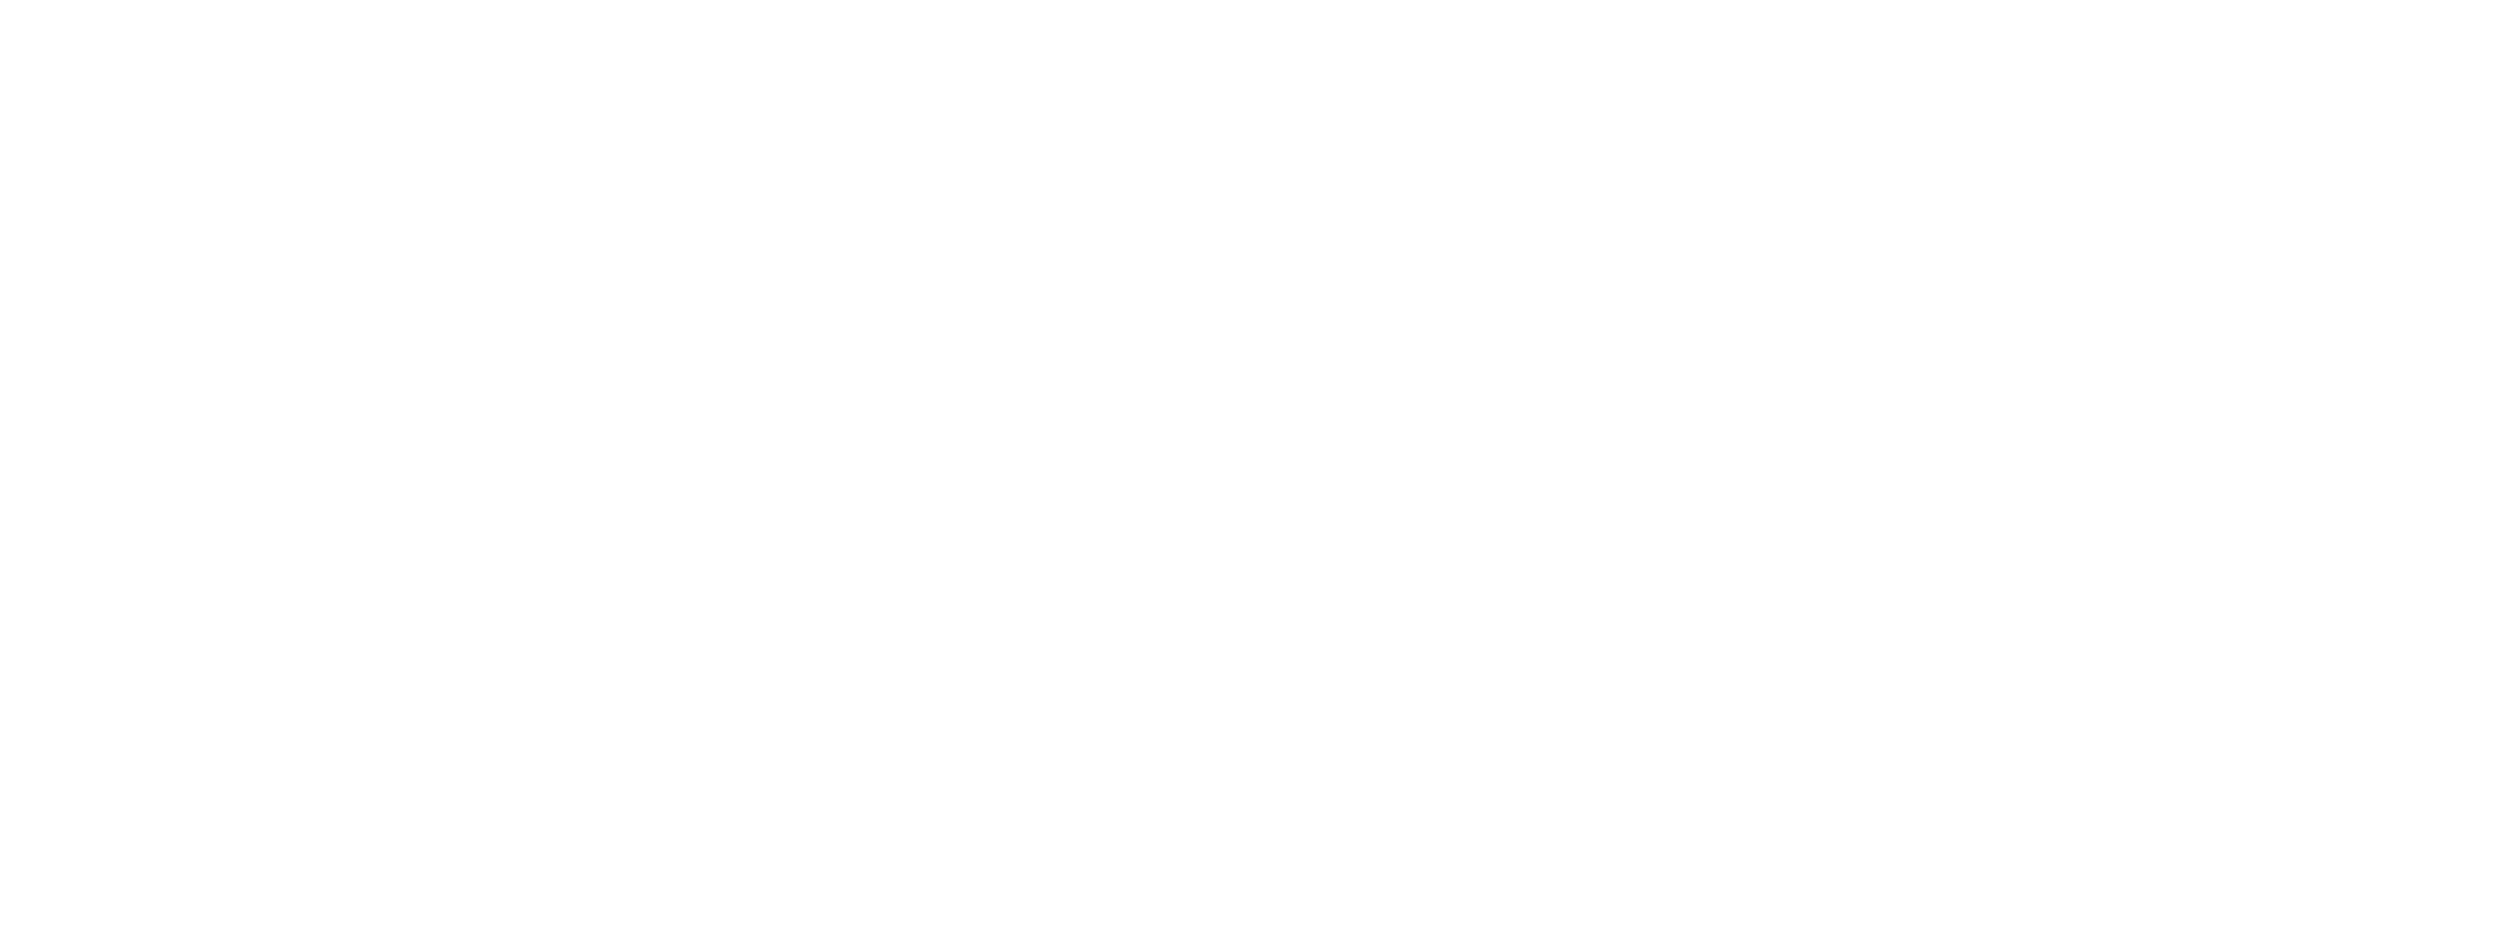 trellis-logo_white-lg.png